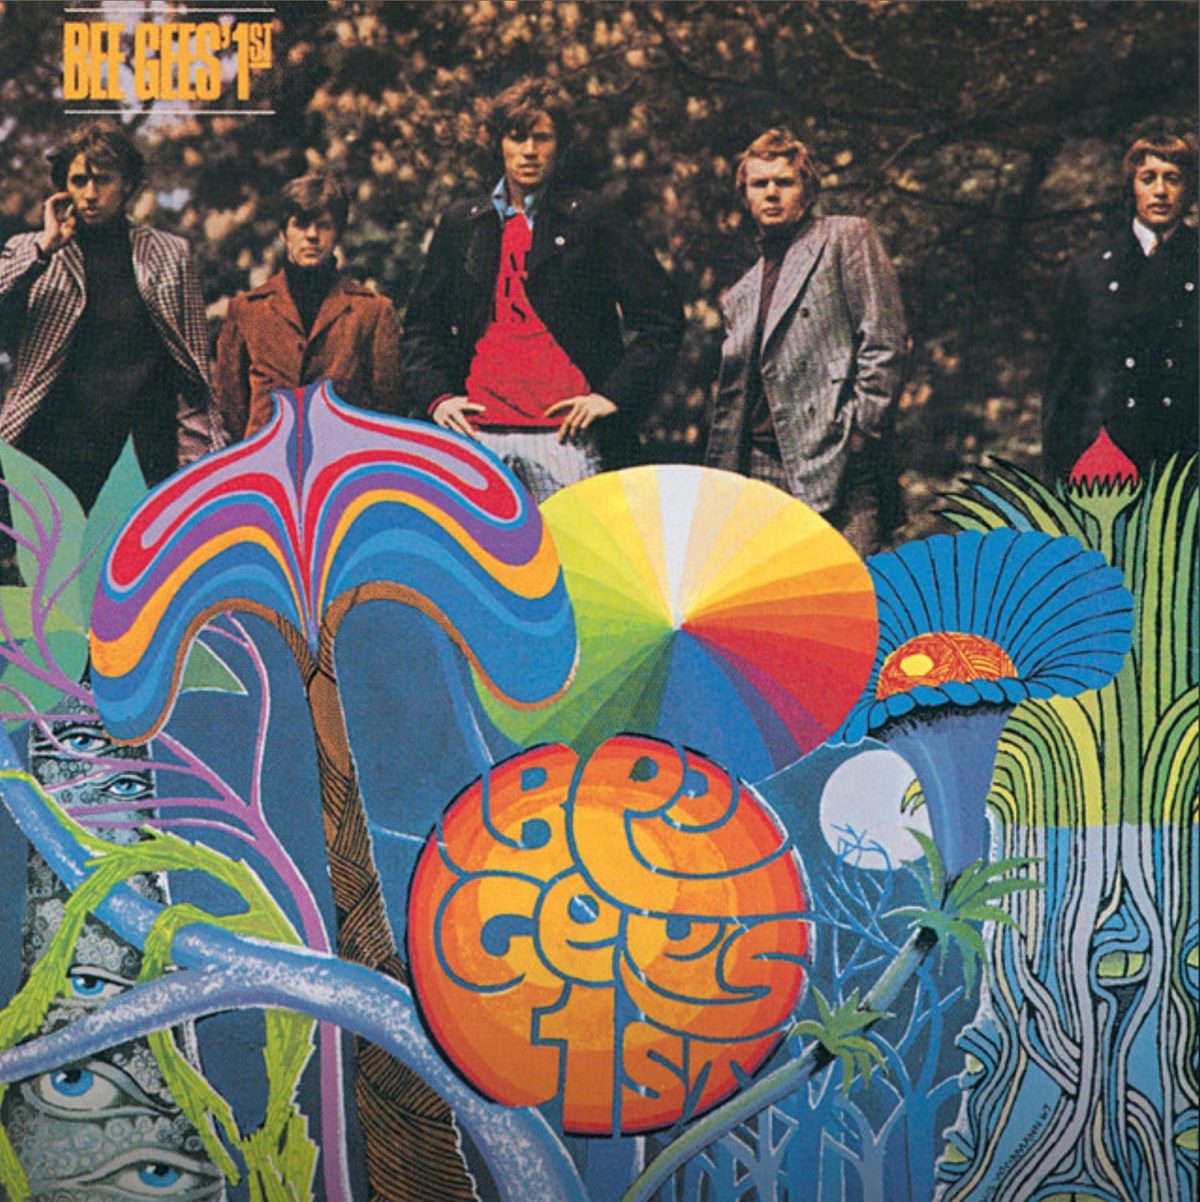 Bee Gees Released Third Album 